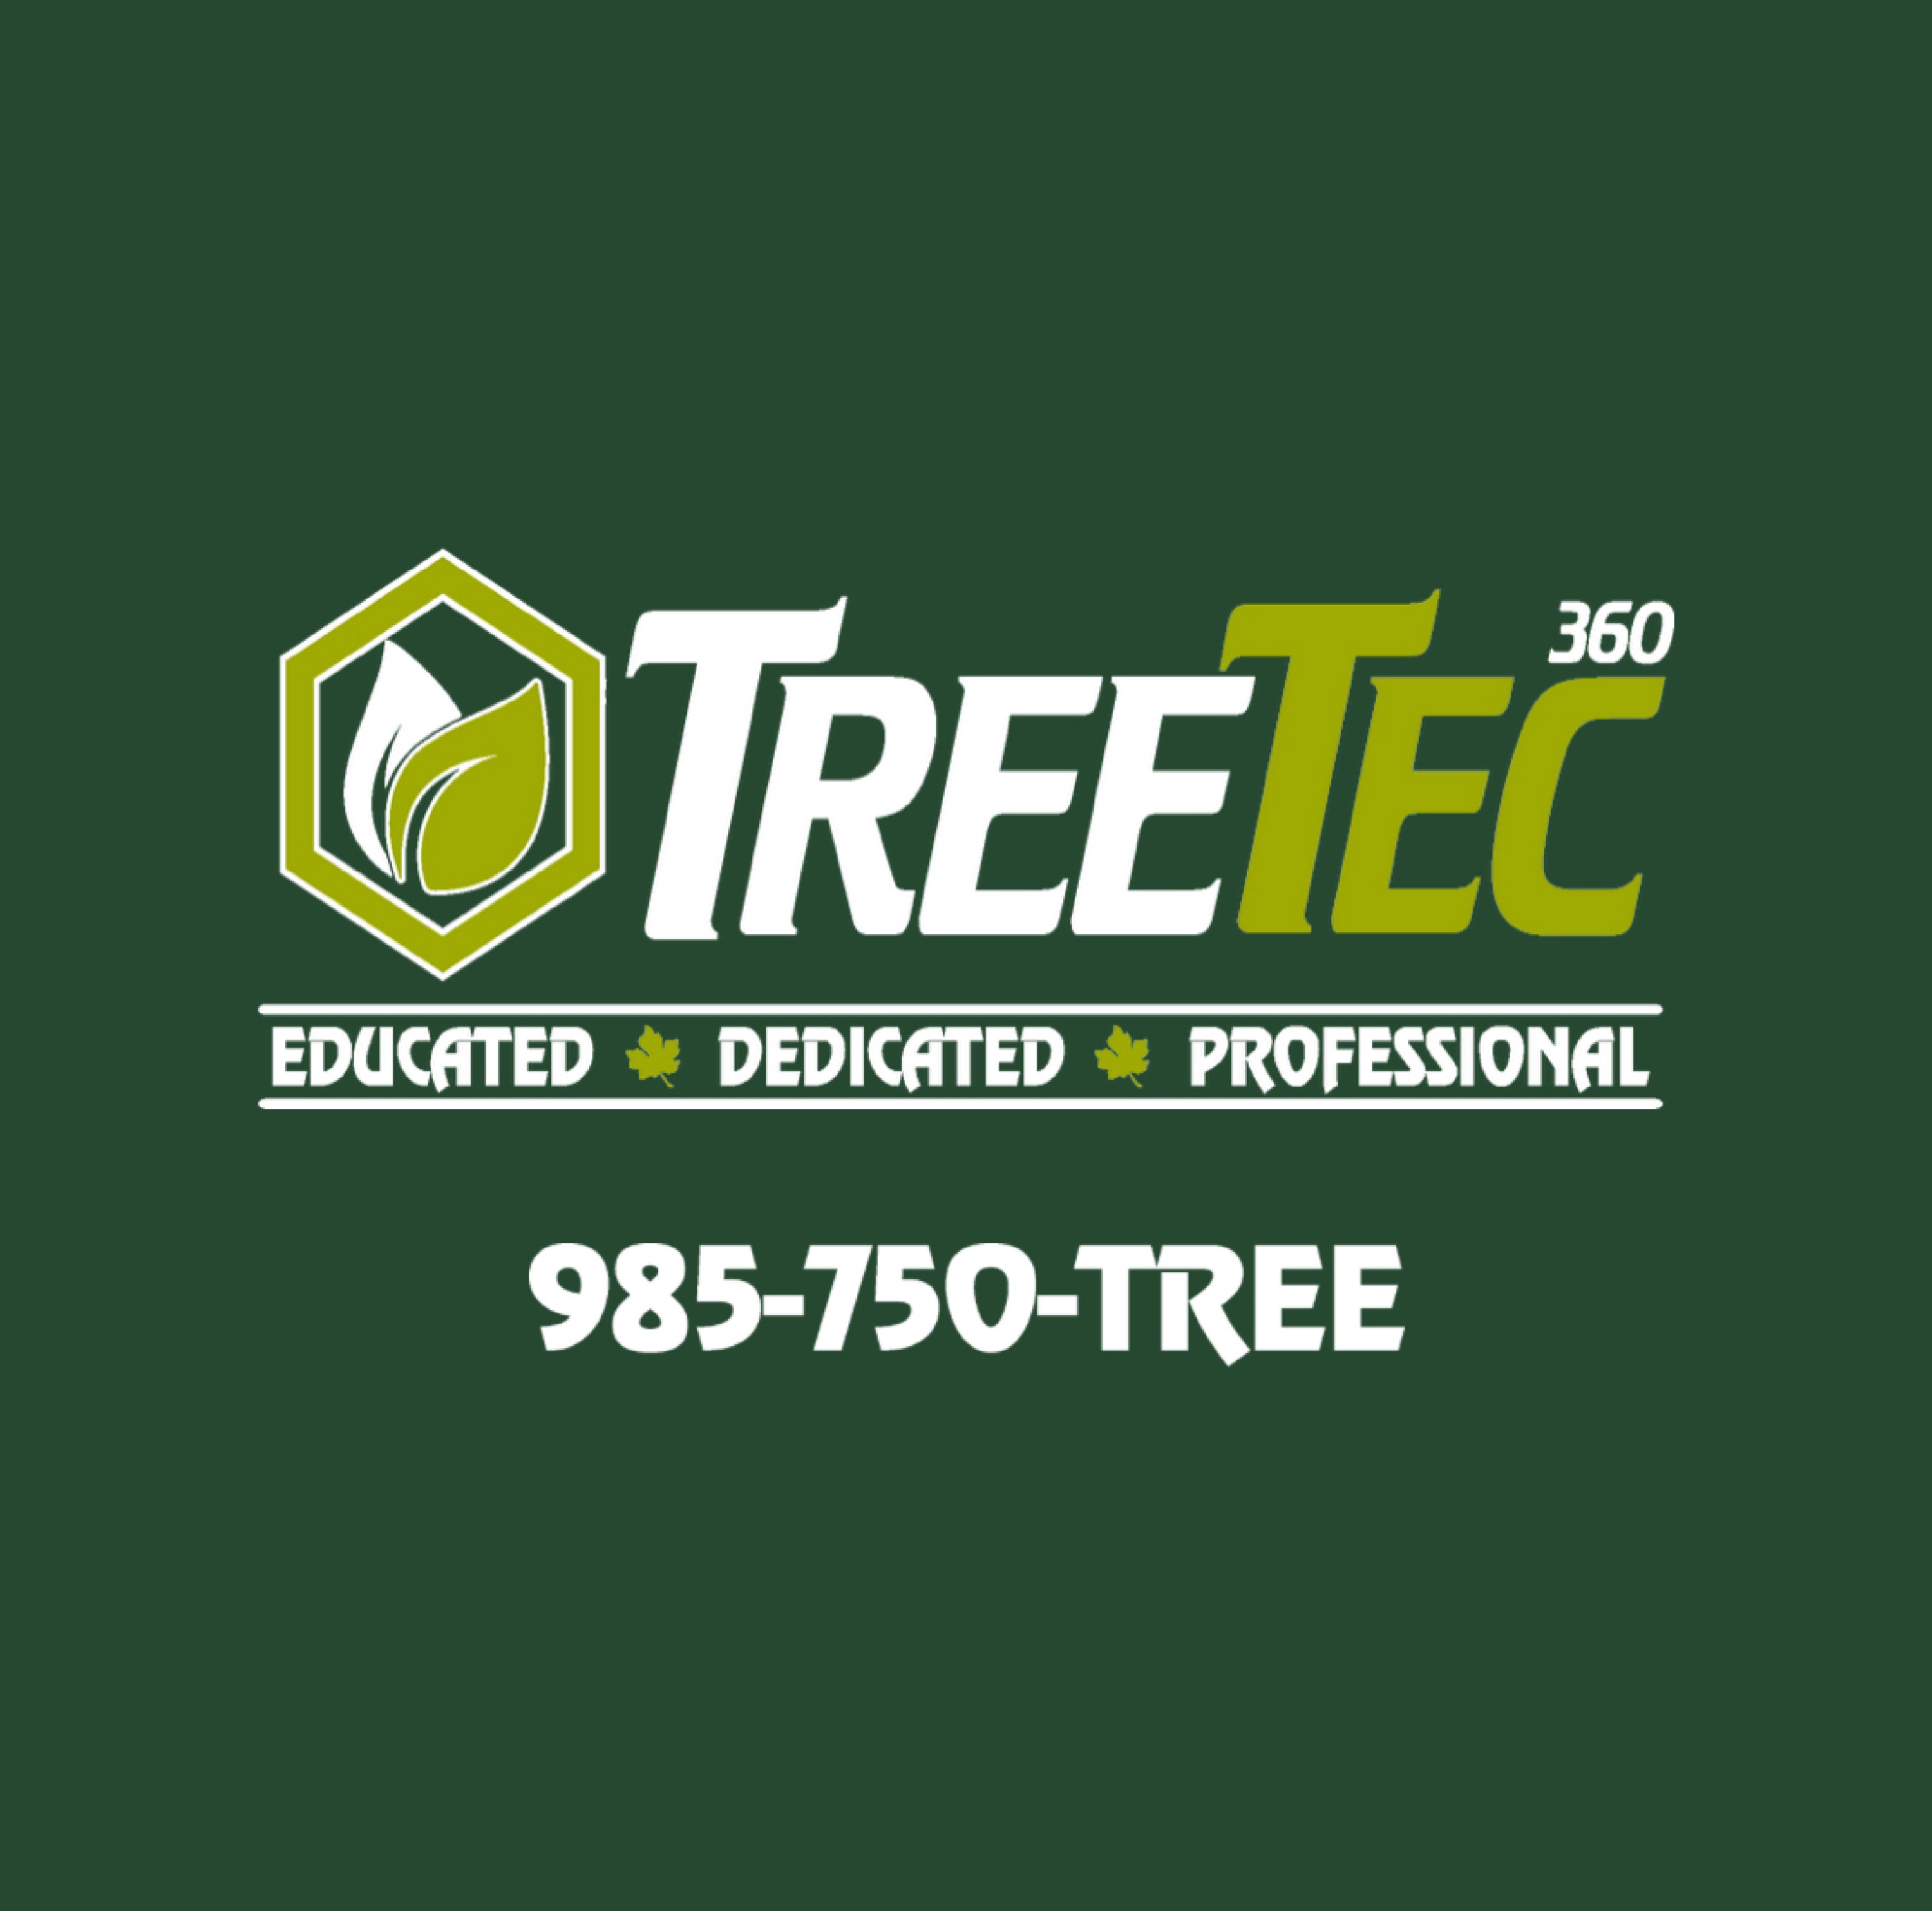 TreeTec 360 Logo